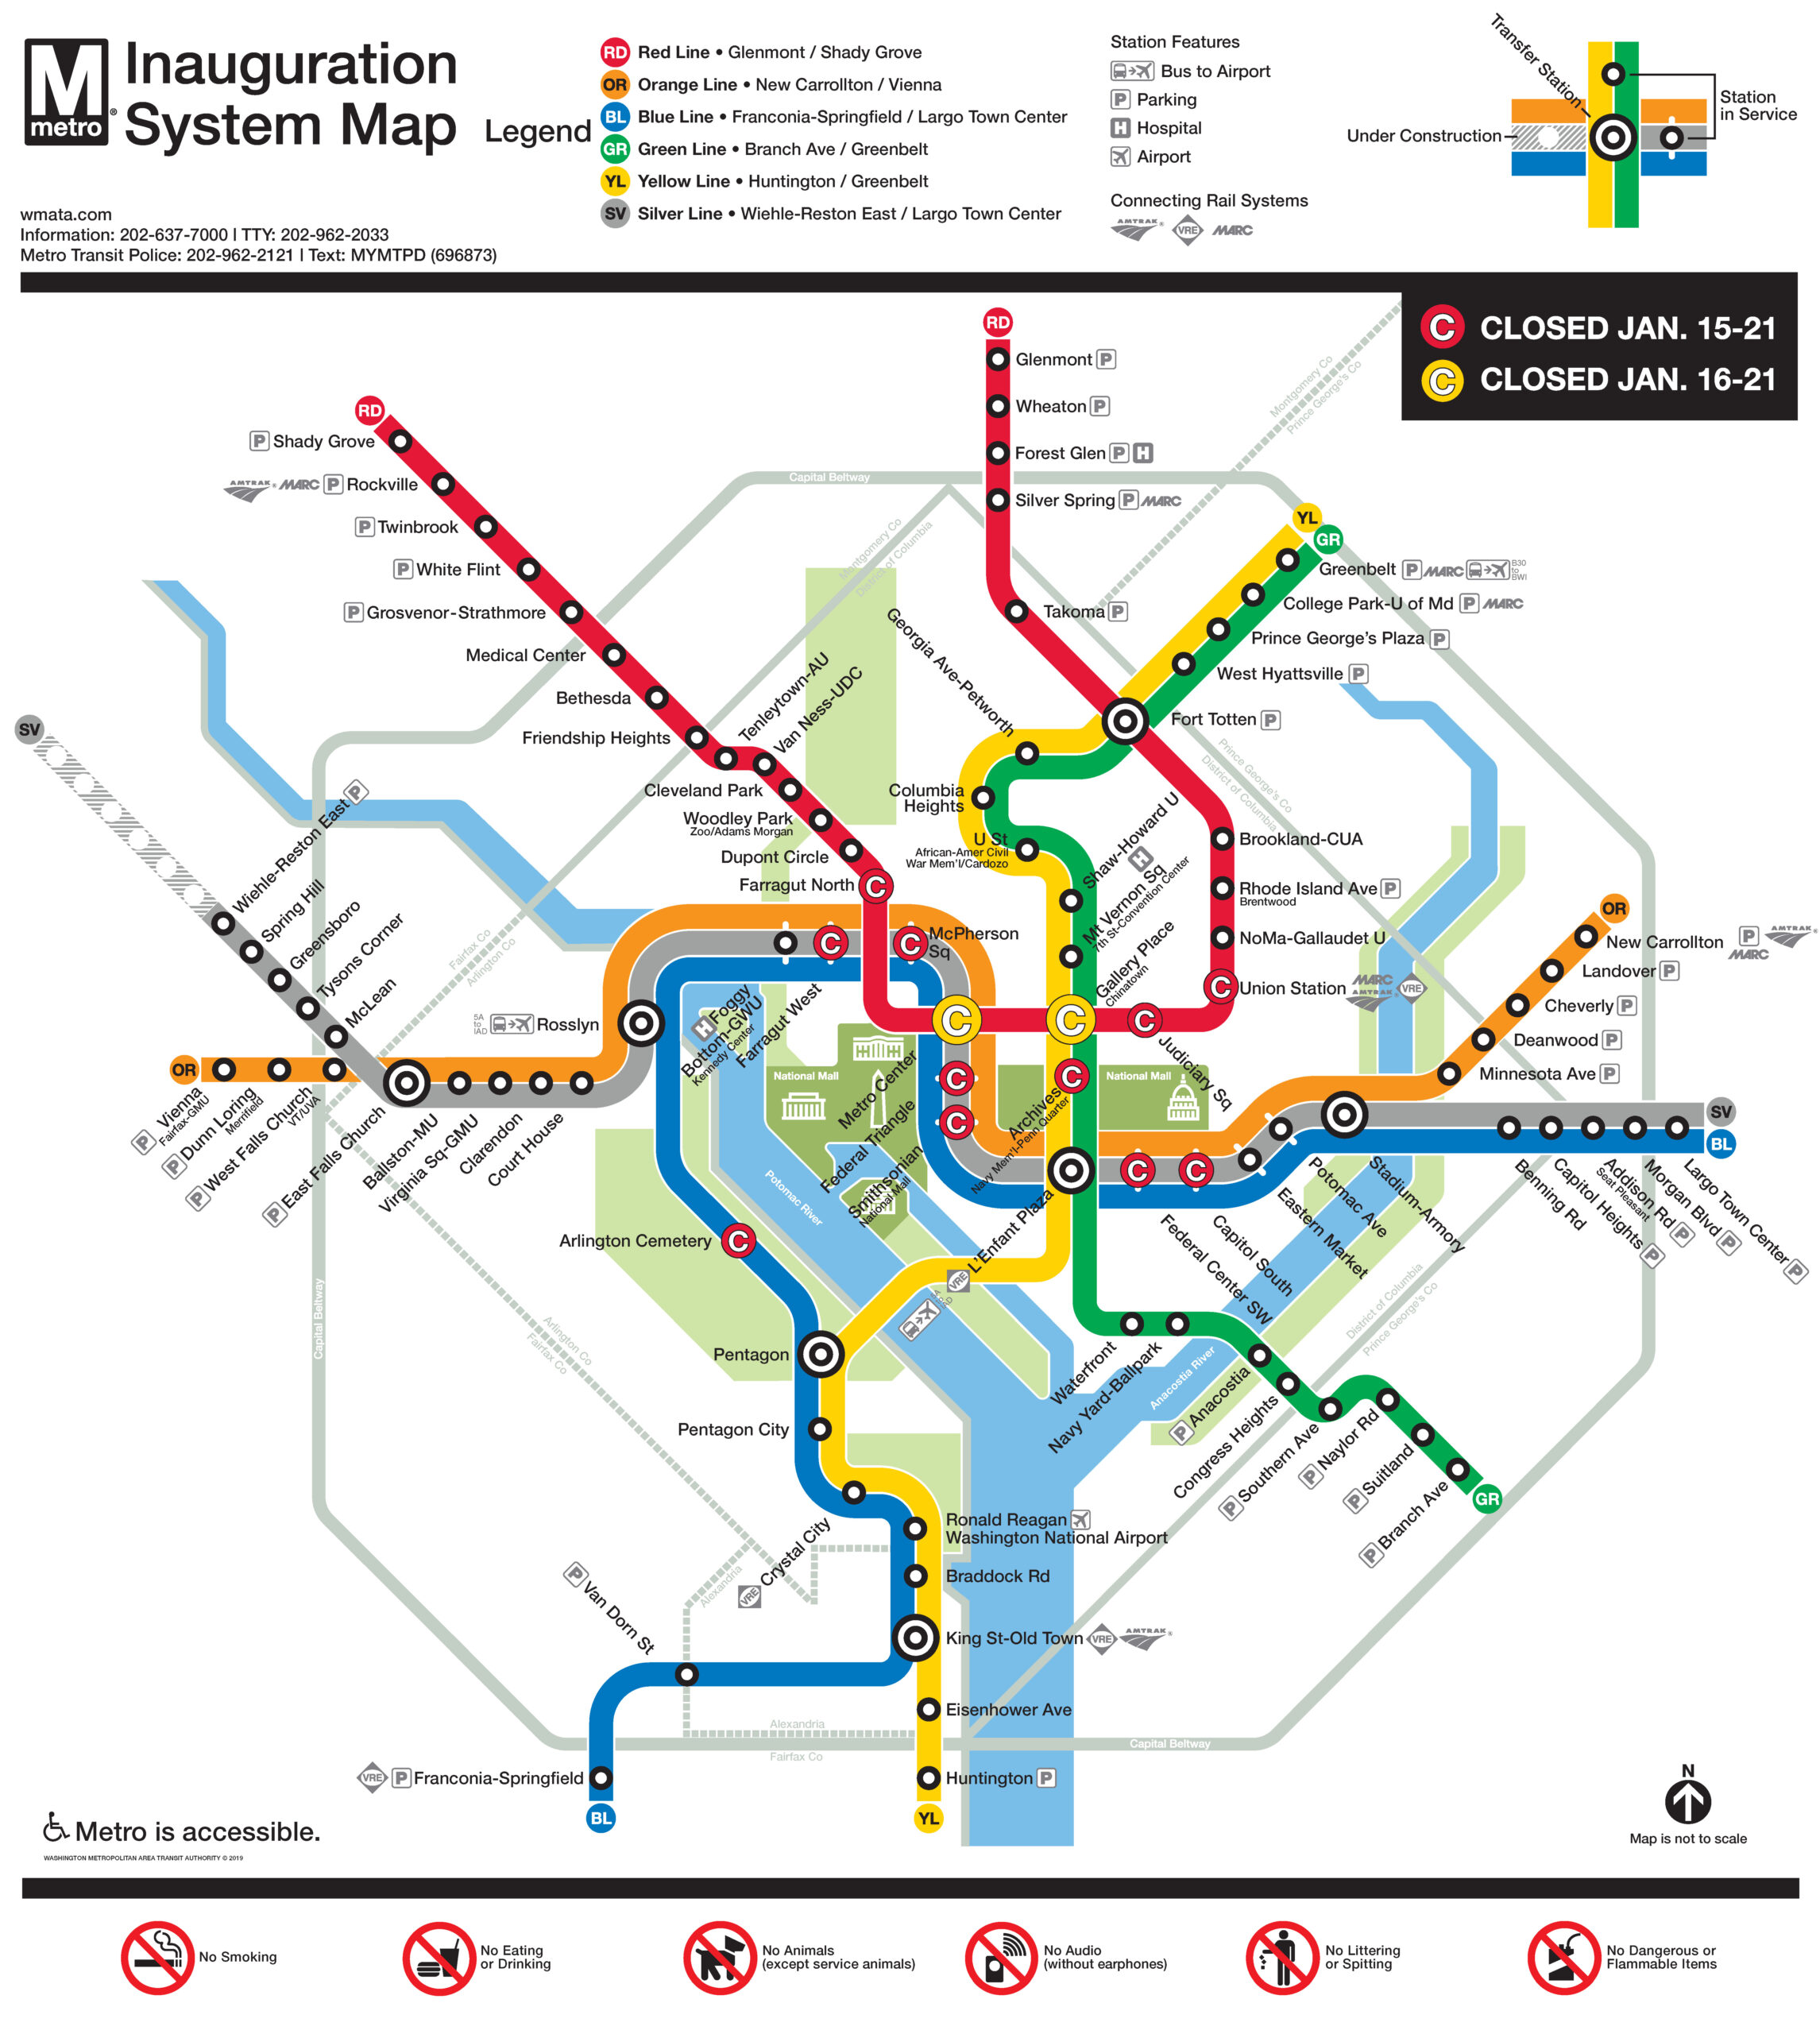 Metro Announces Inauguration Service Plans, Station Closures